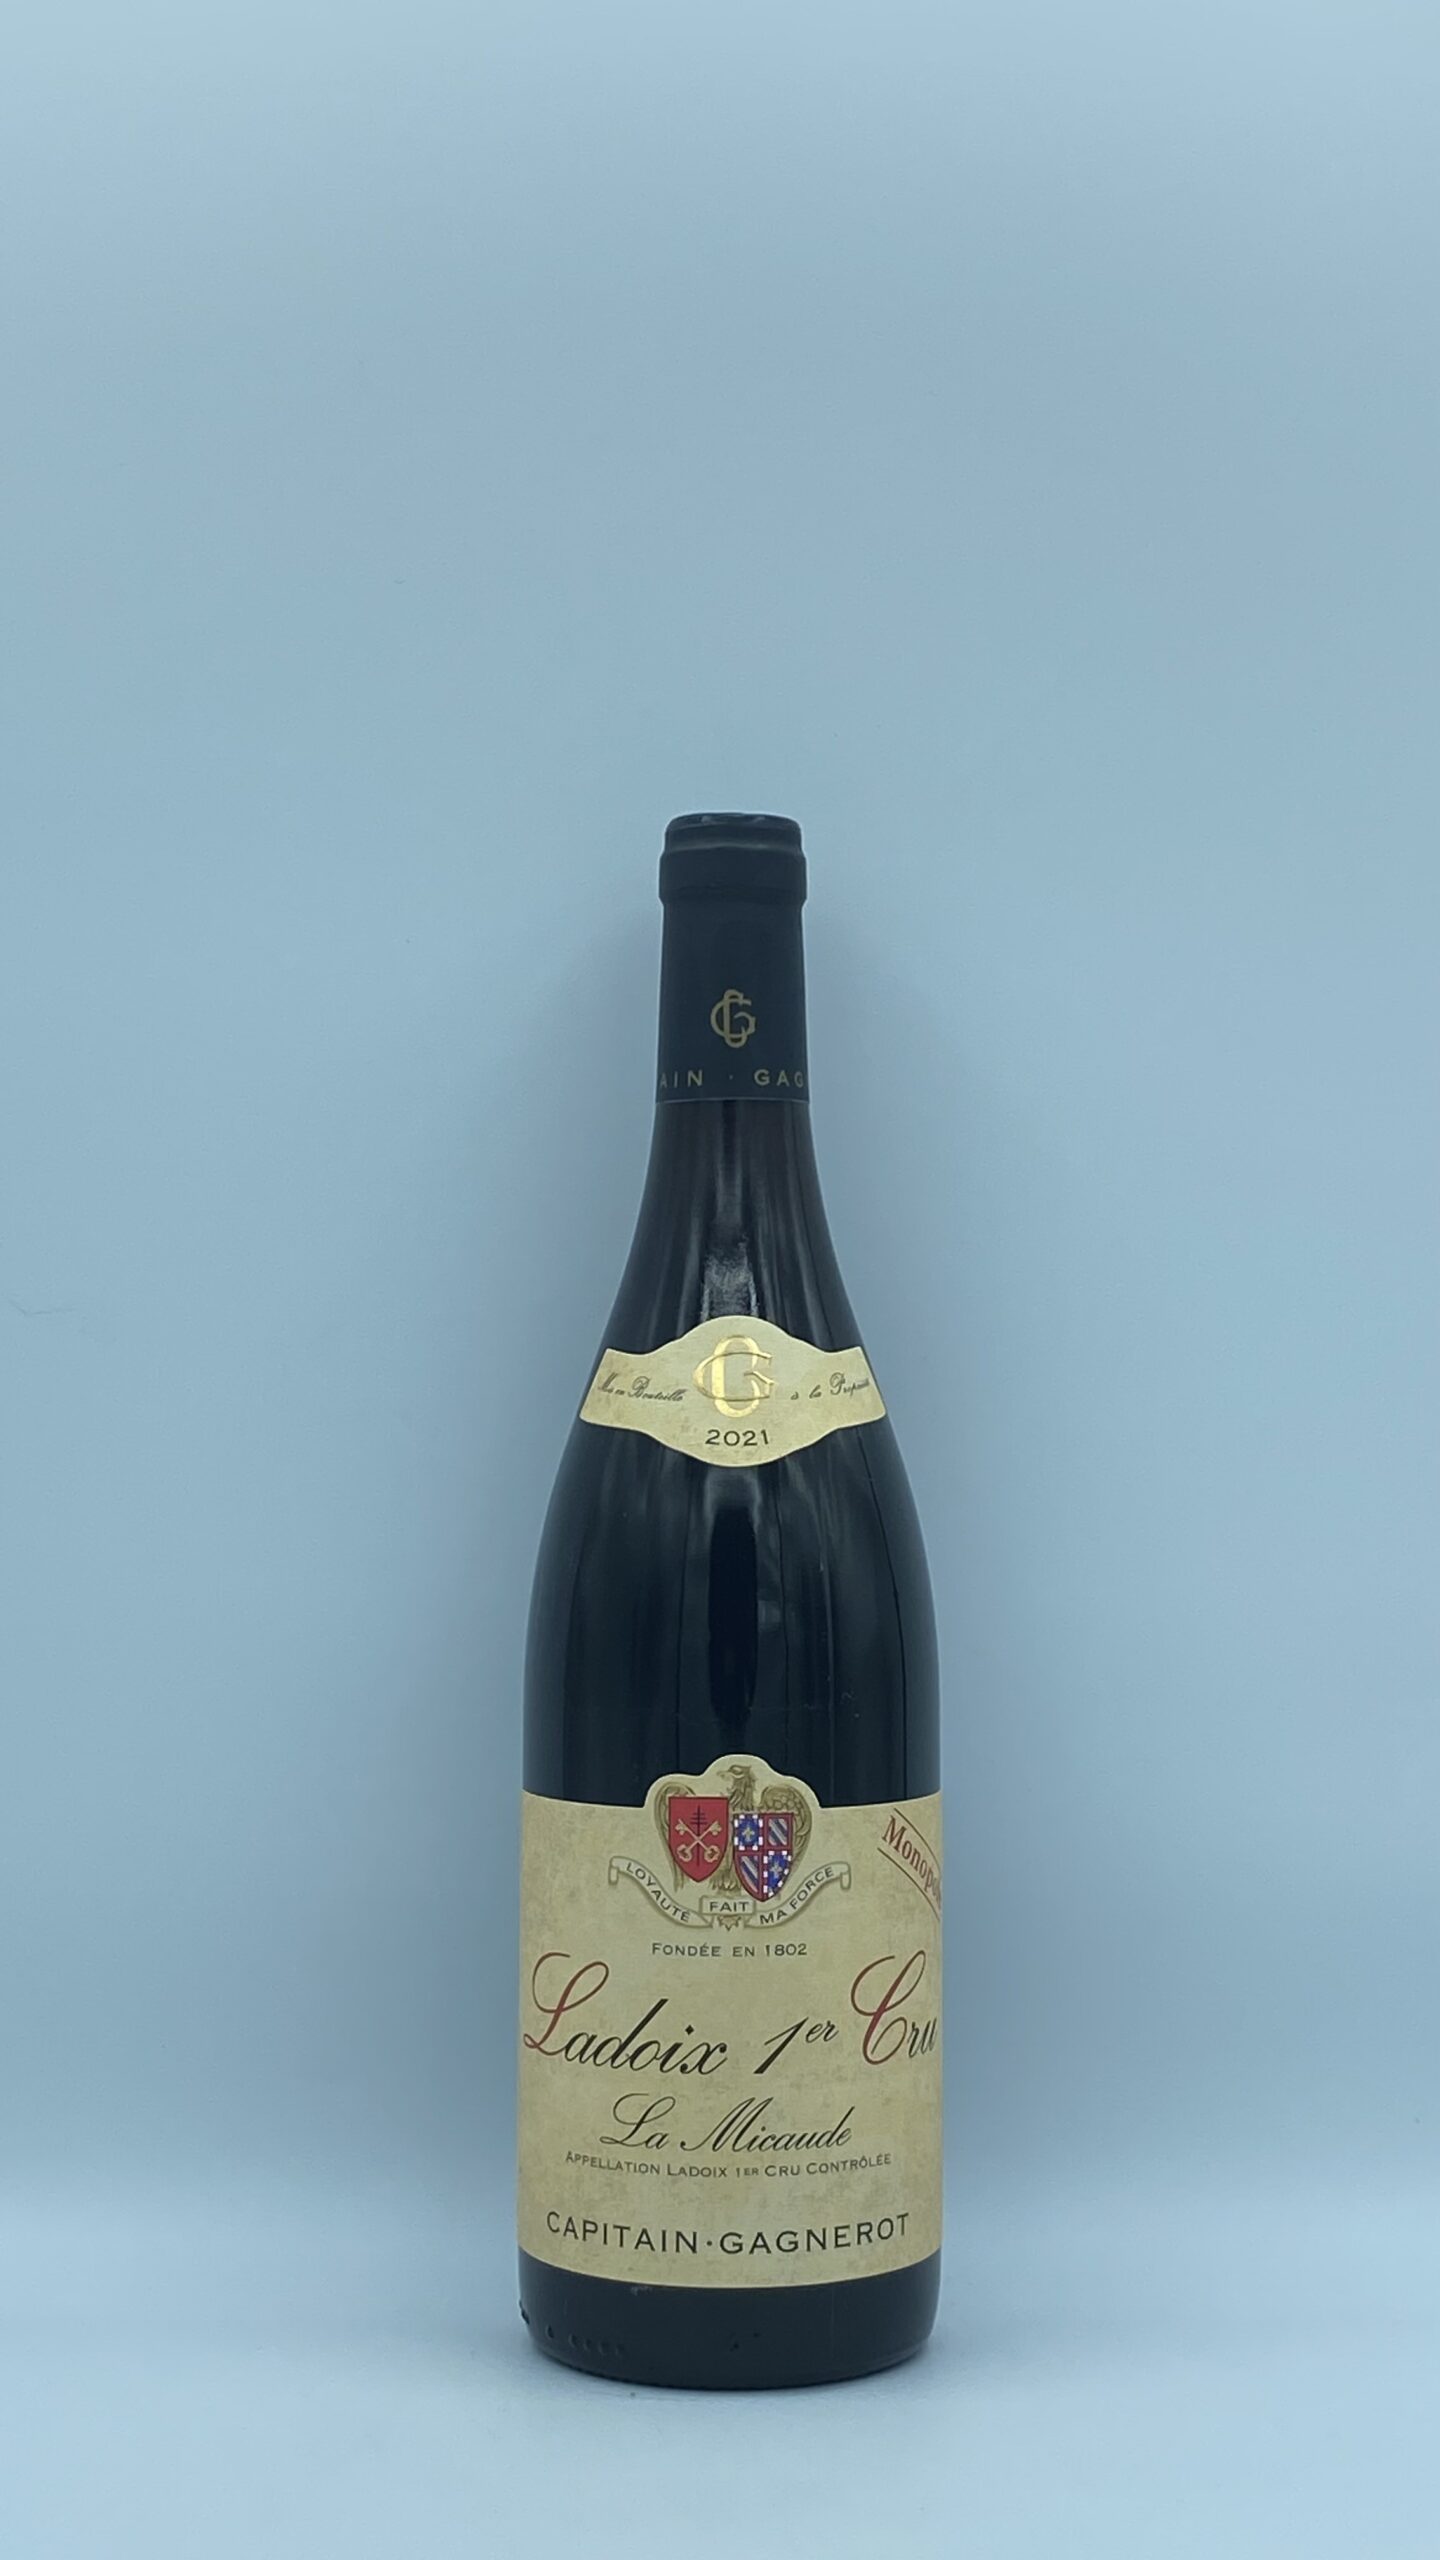 Bourgogne Ladoix 1er cru “La Micaude” 2021 Domaine Capitain Gagnerot